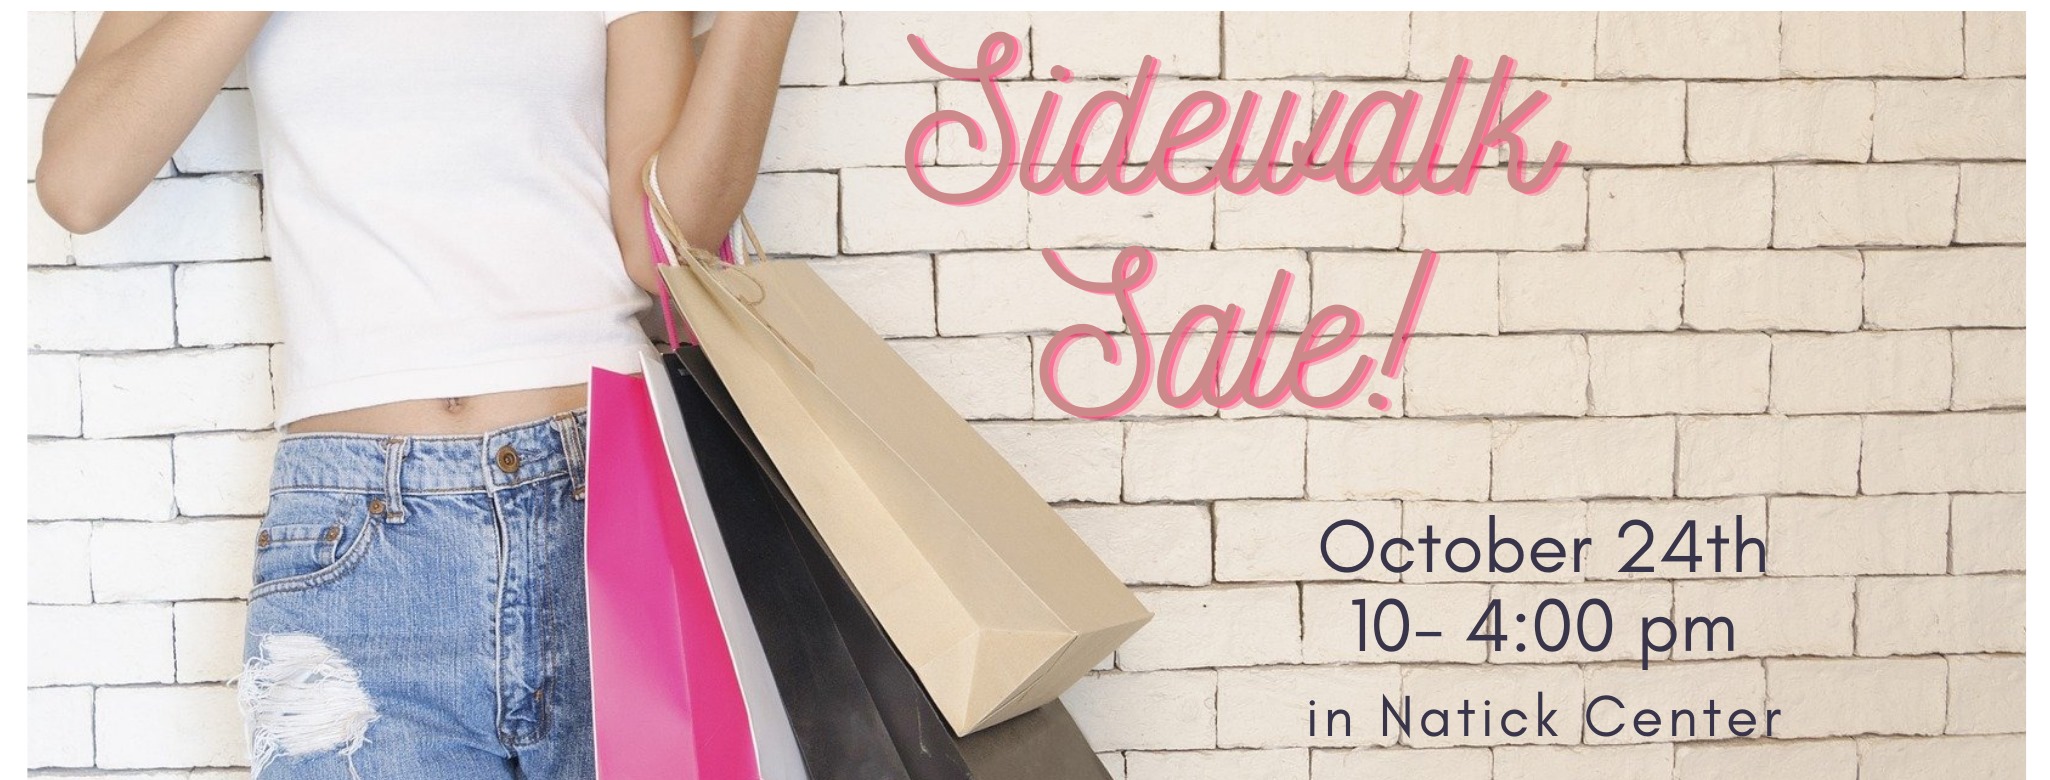 Downtown Natick Sidewalk Sale Saturday - Framingham SOURCE